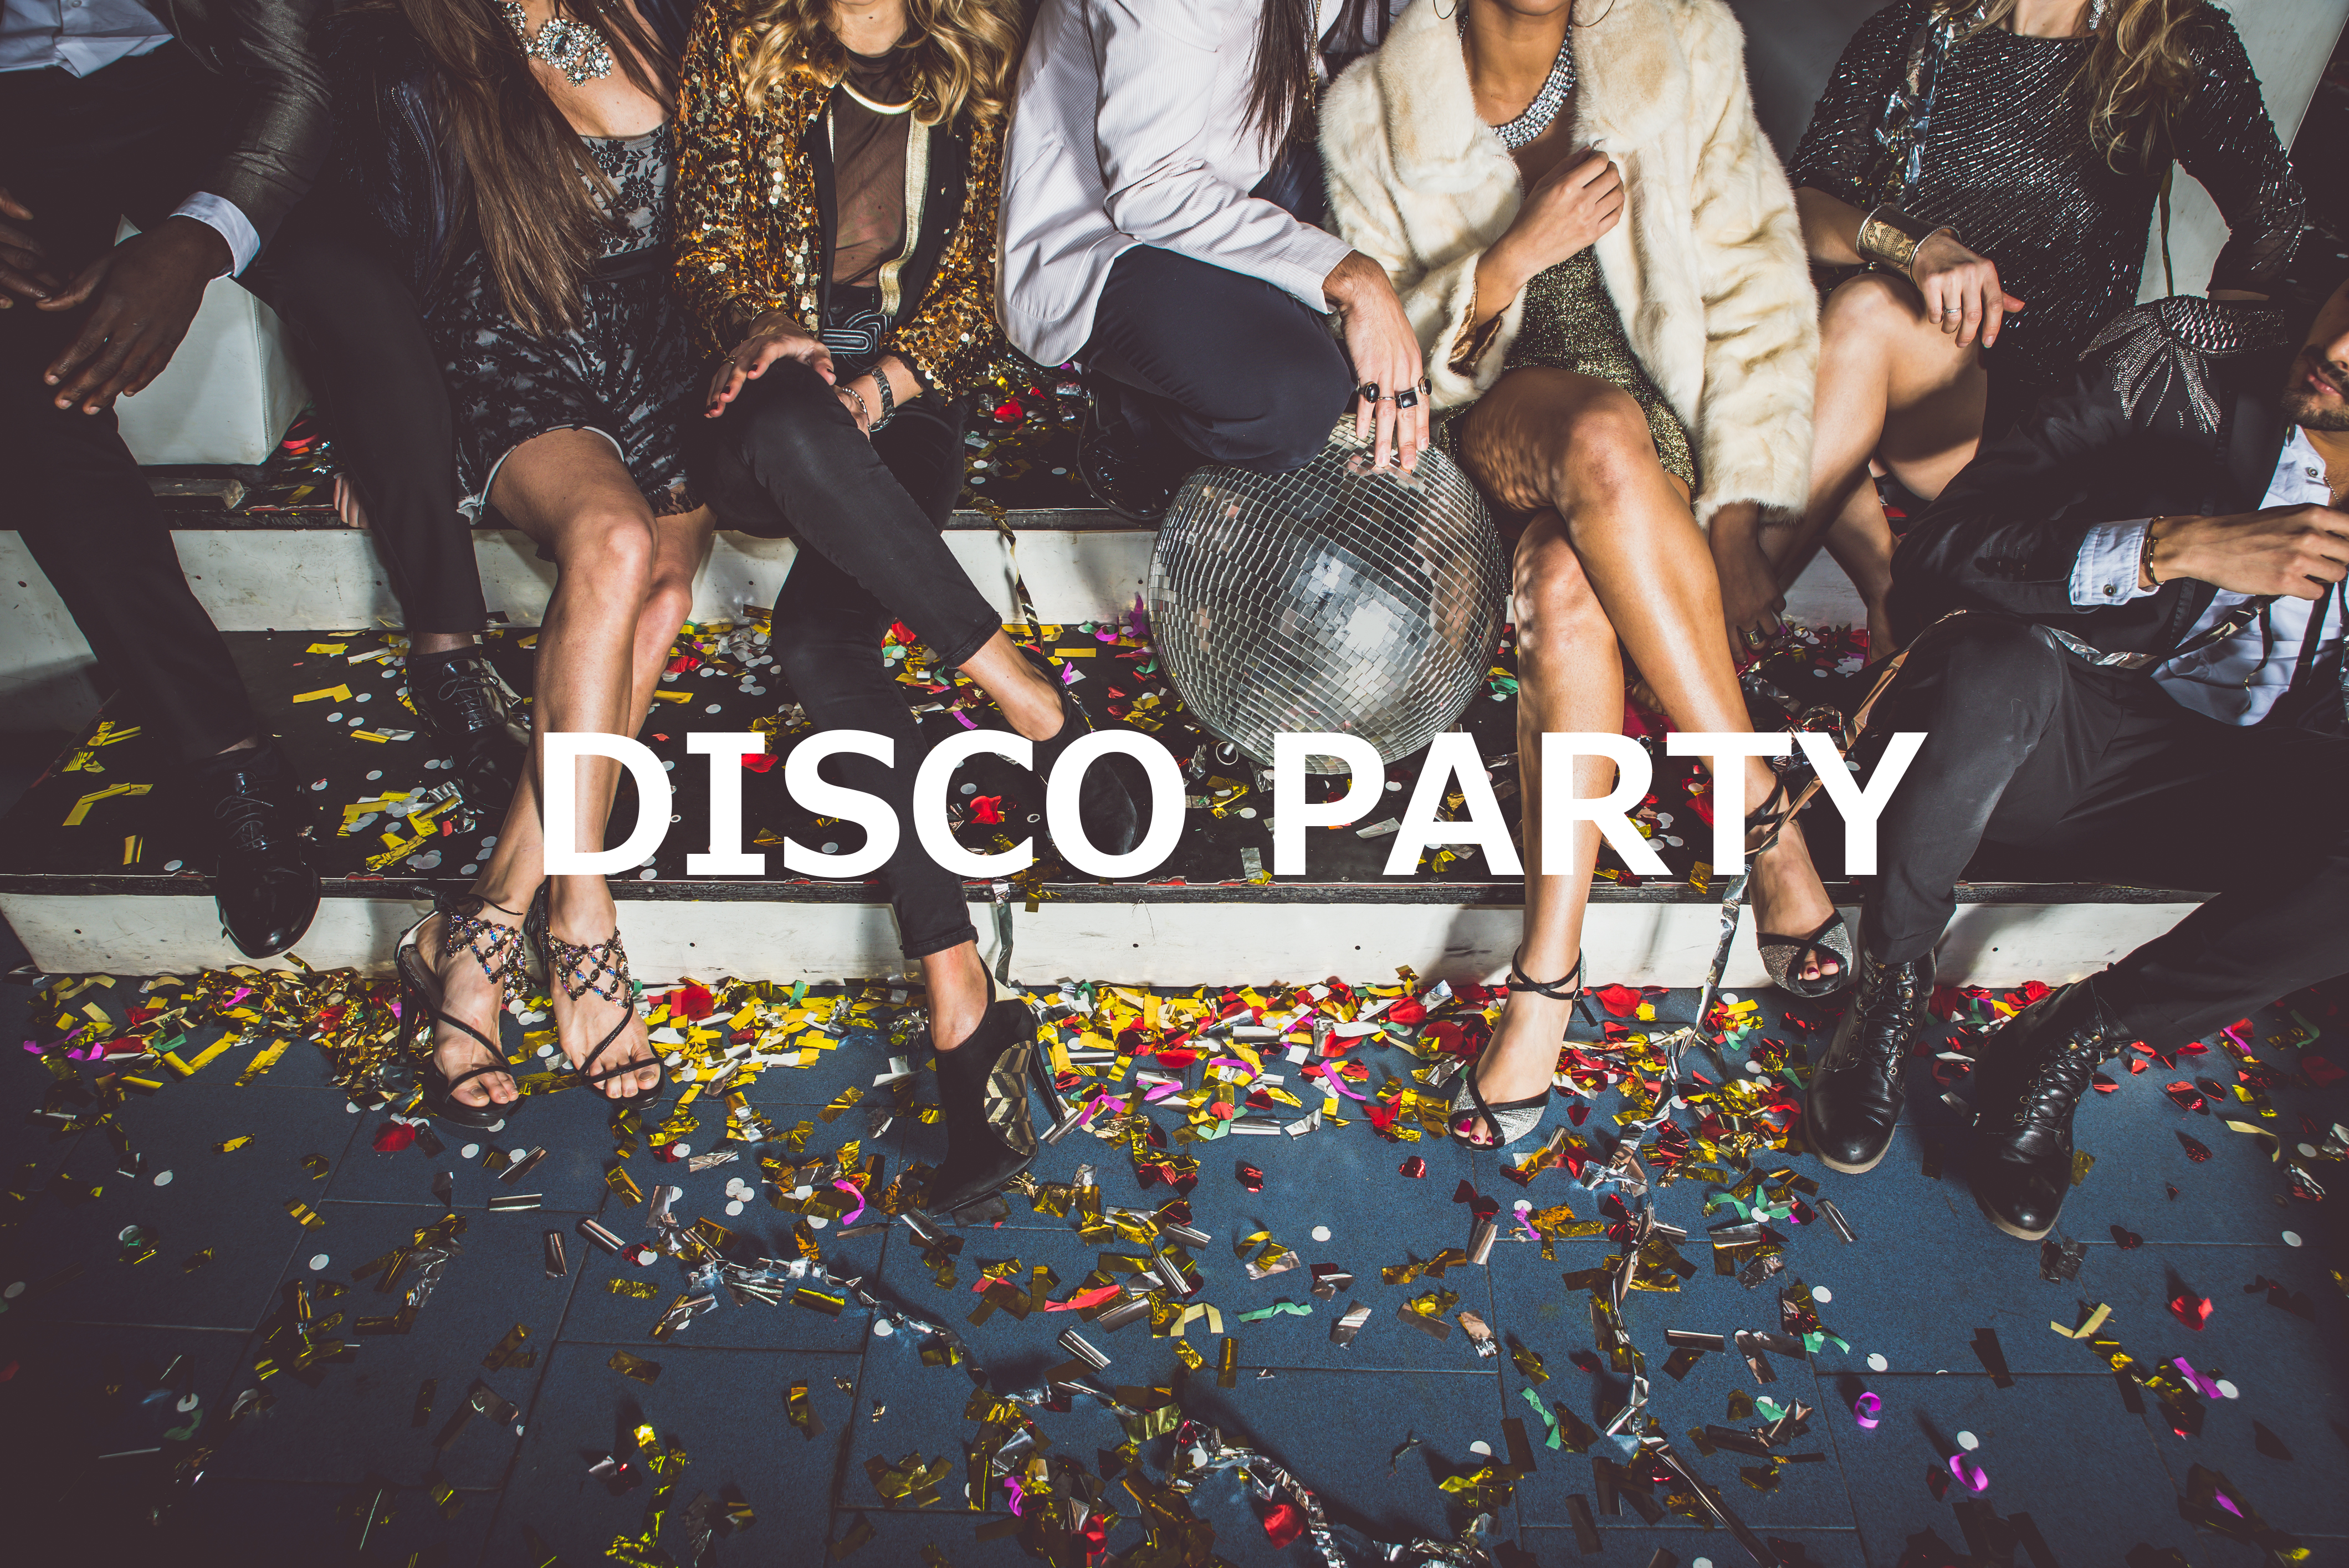 Disco party